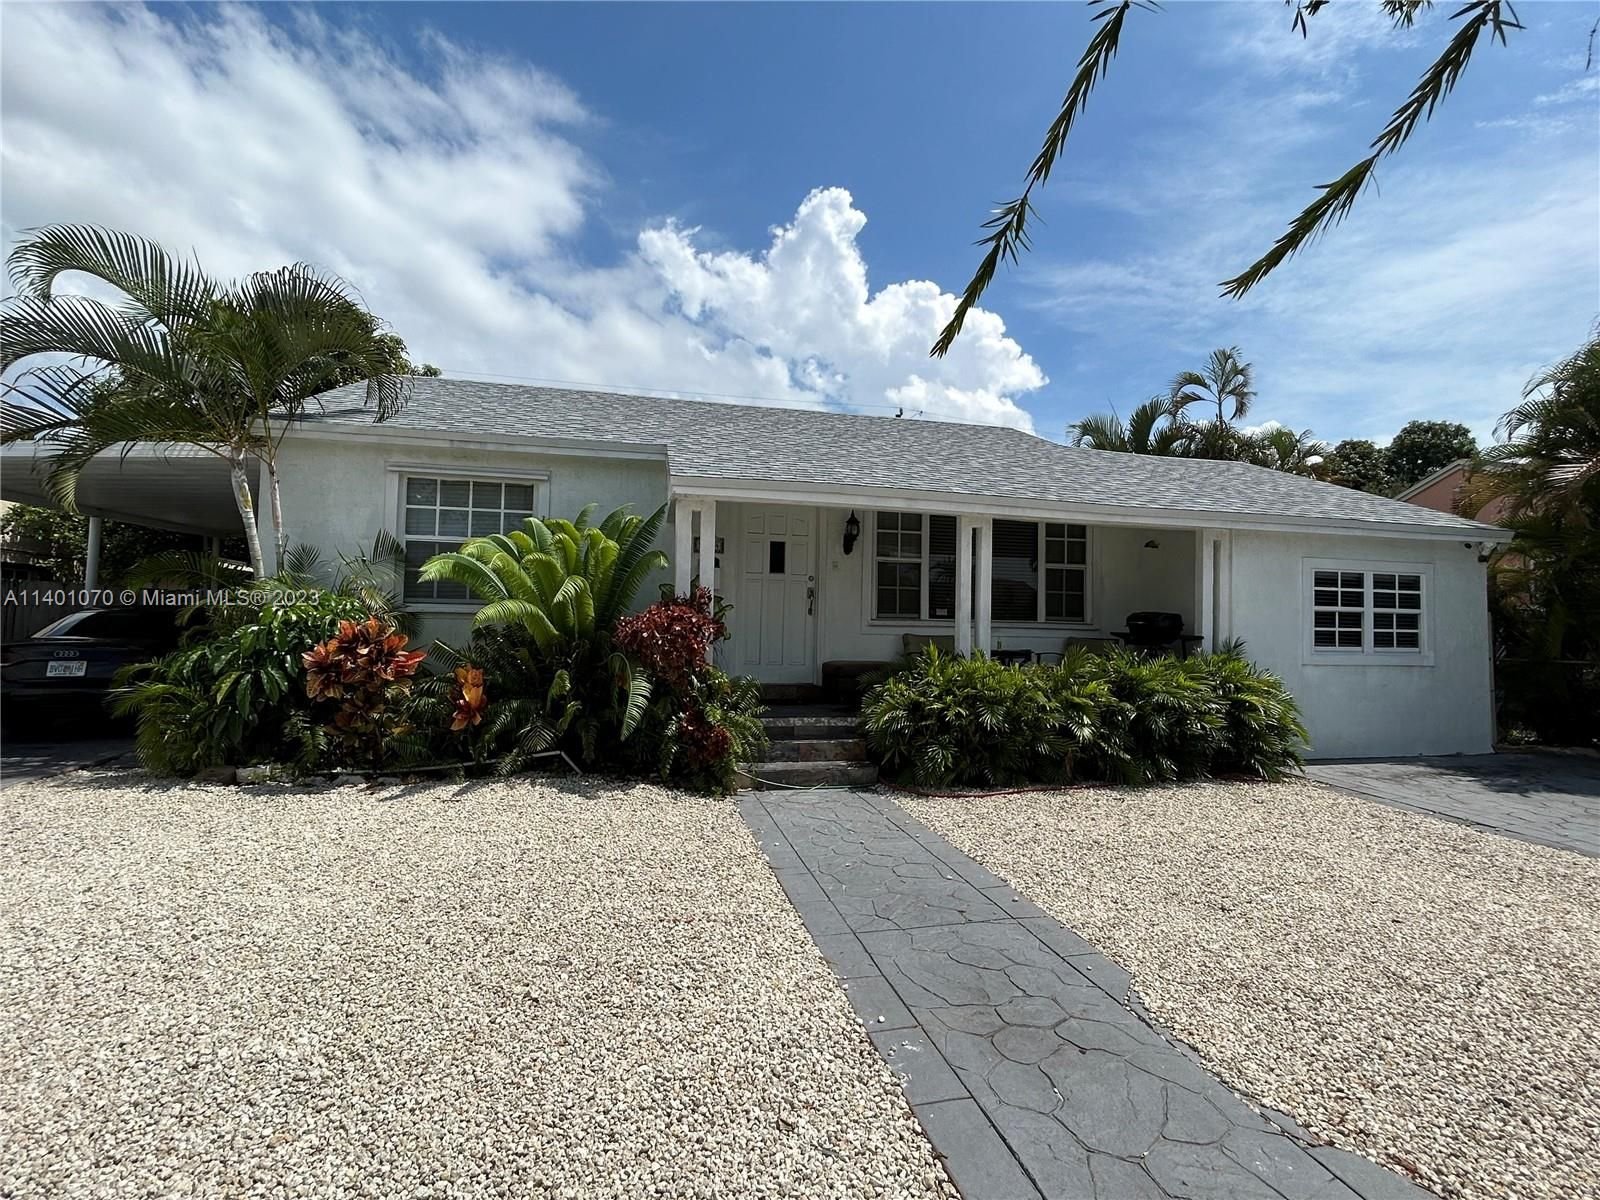 Real estate property located at 3554 12th Ter, Miami-Dade County, Miami, FL